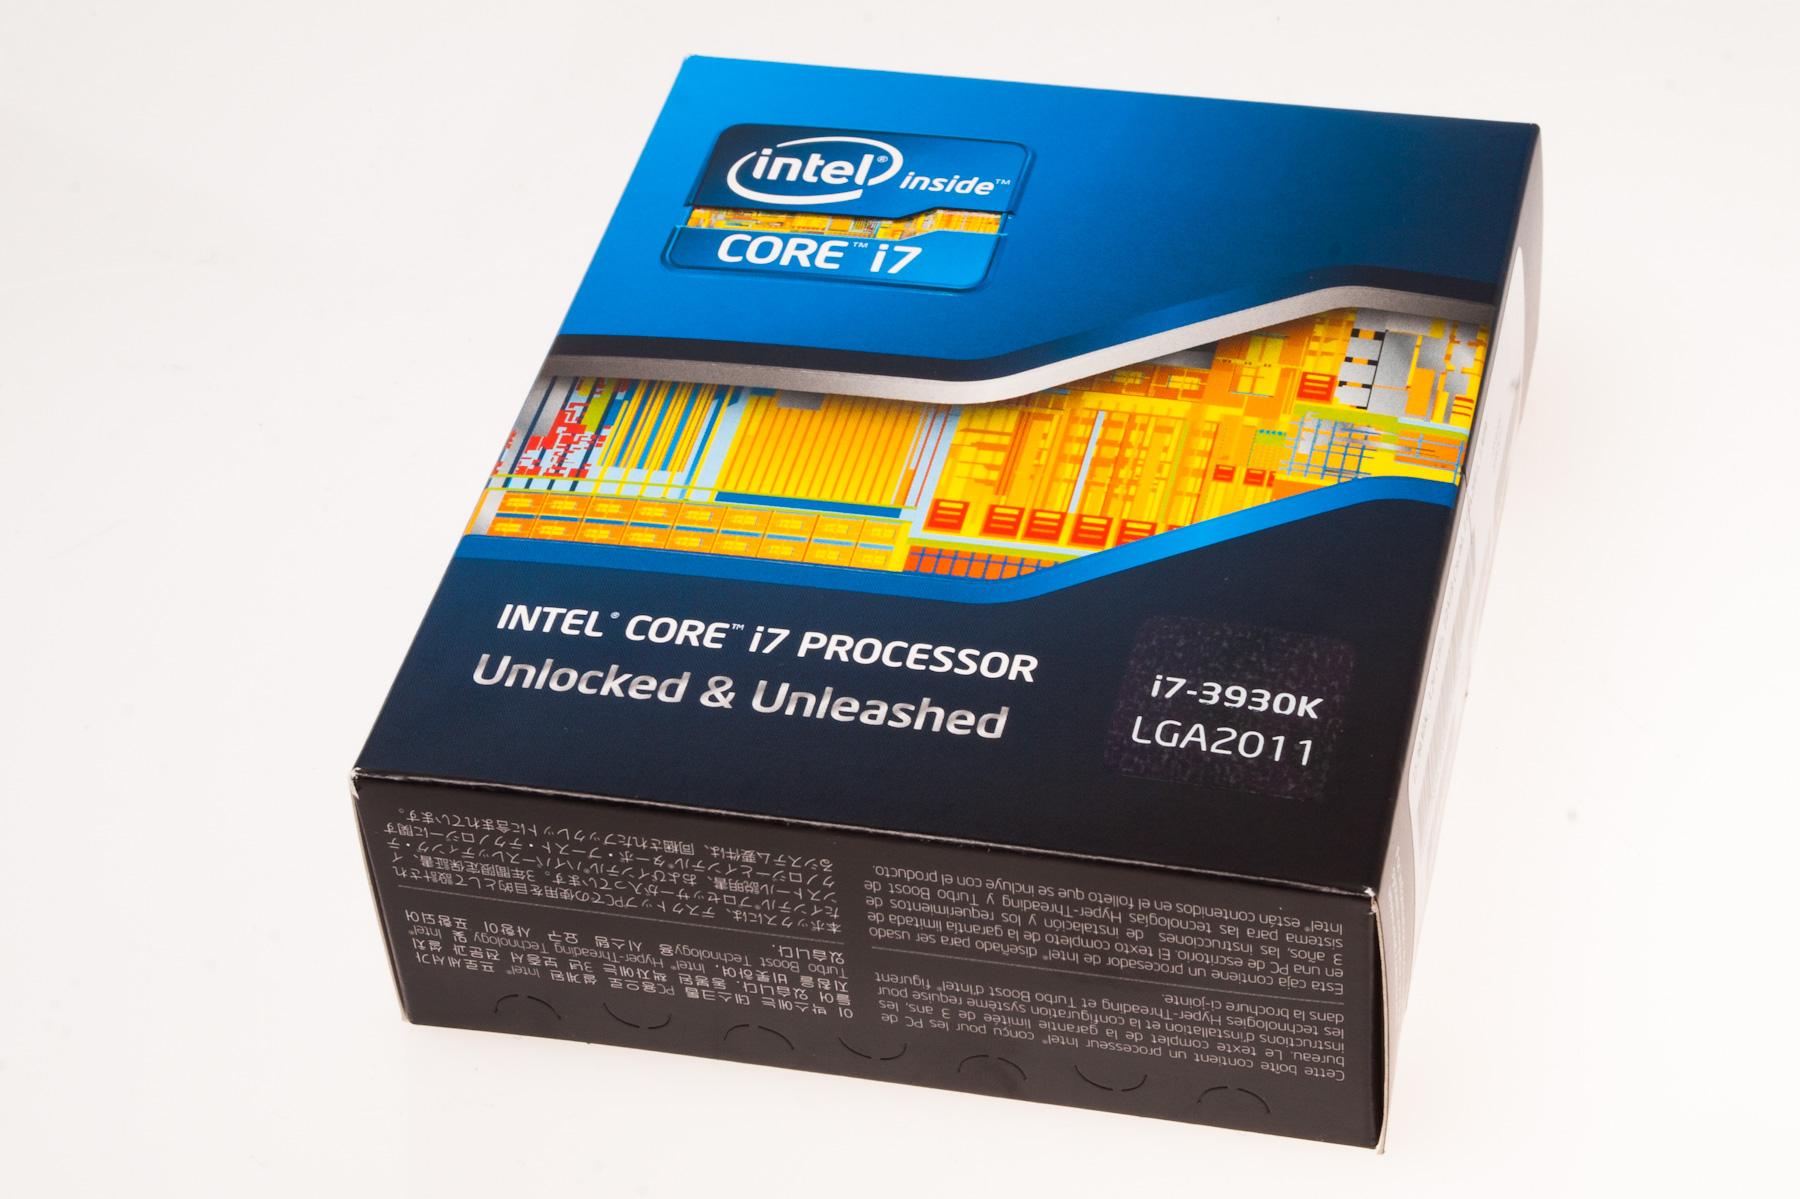 Intel Core i7 3930k.Foto: Varg Aamo, hardware.no